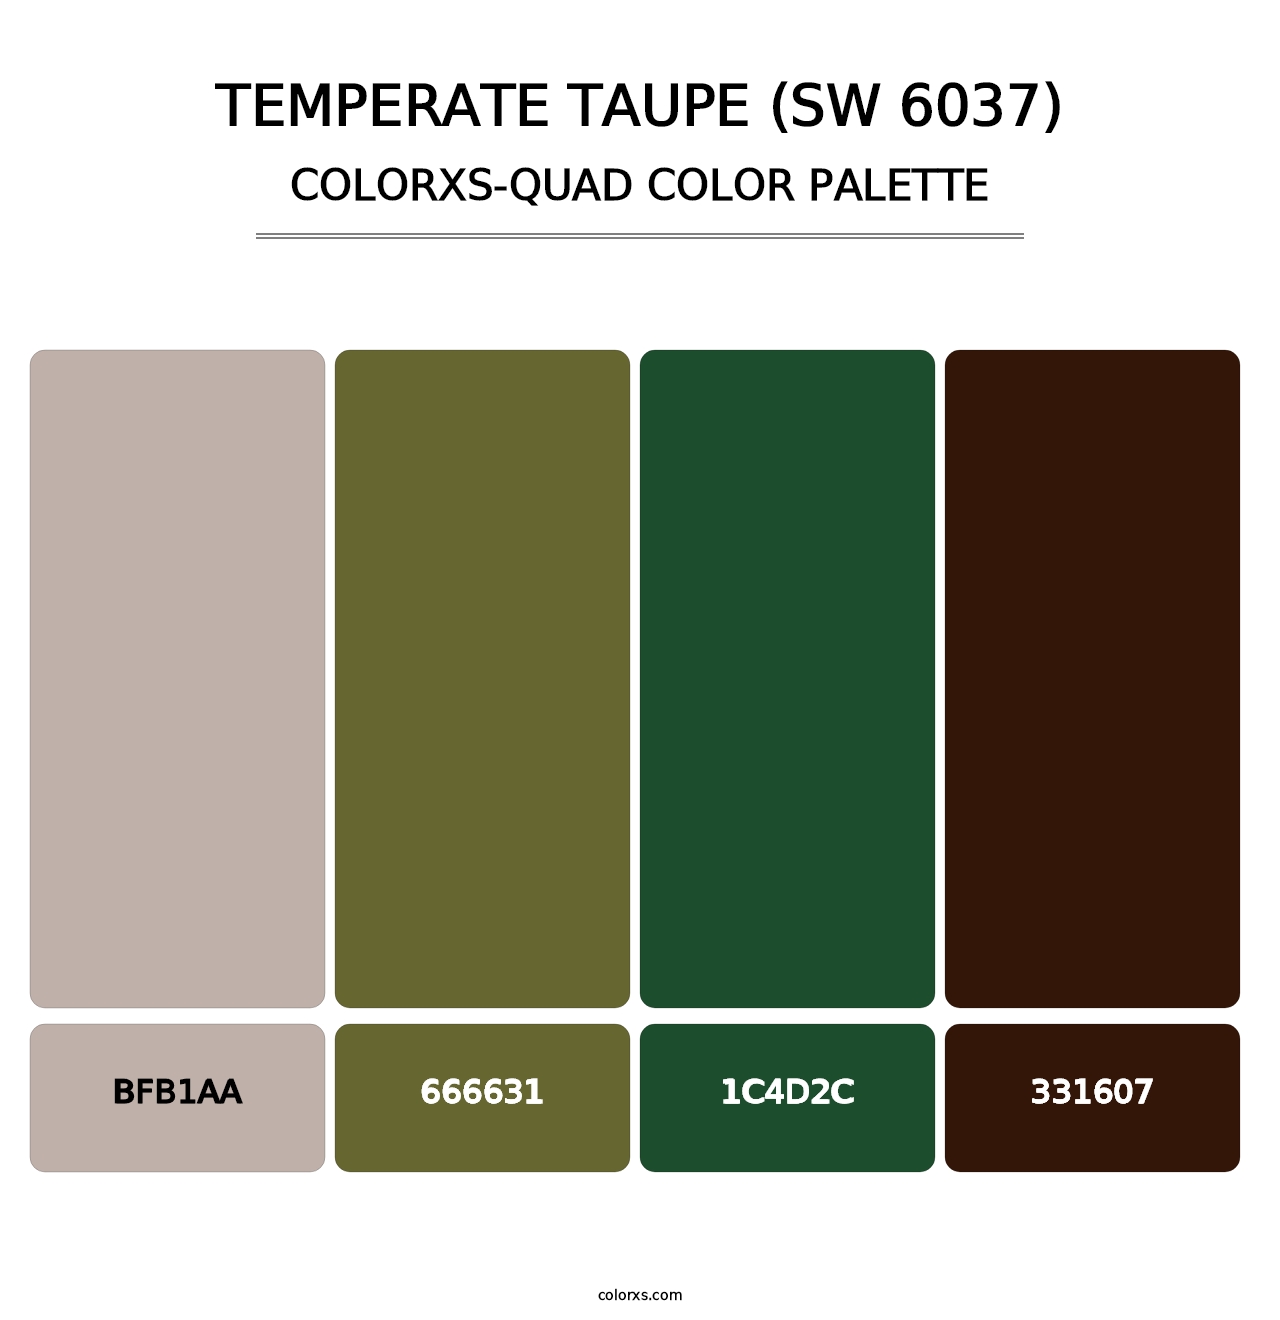 Temperate Taupe (SW 6037) - Colorxs Quad Palette